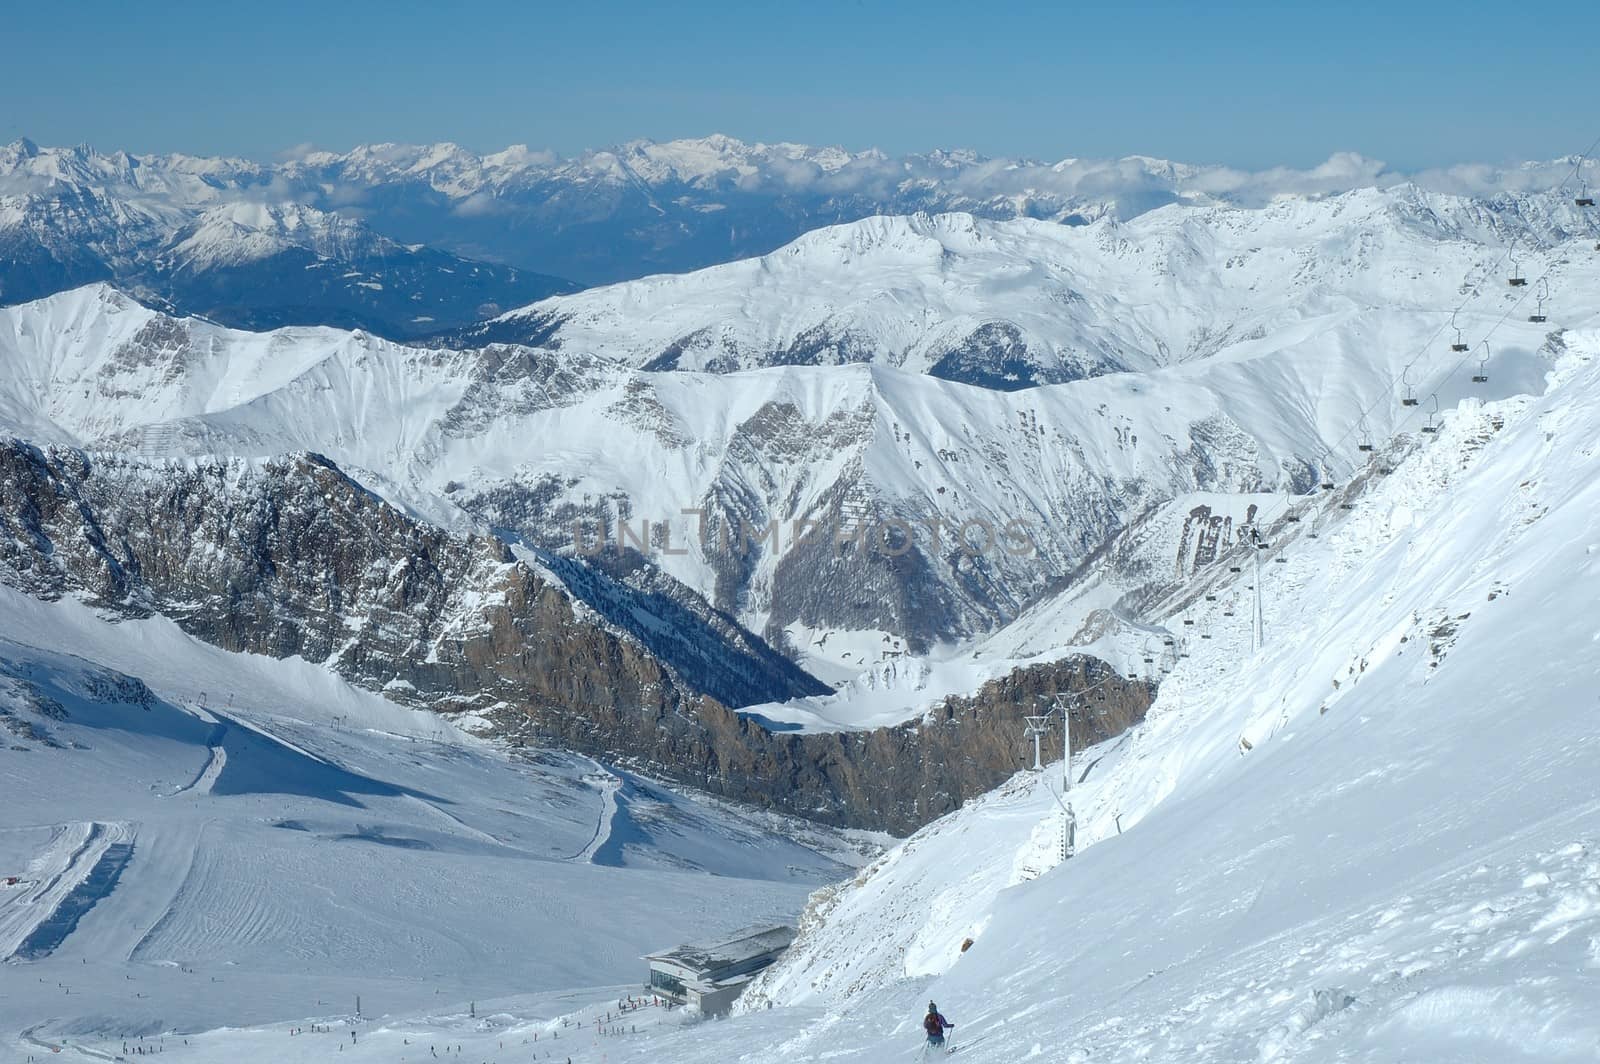 Ski slopes and ski lift on Hintertux glacier by janhetman